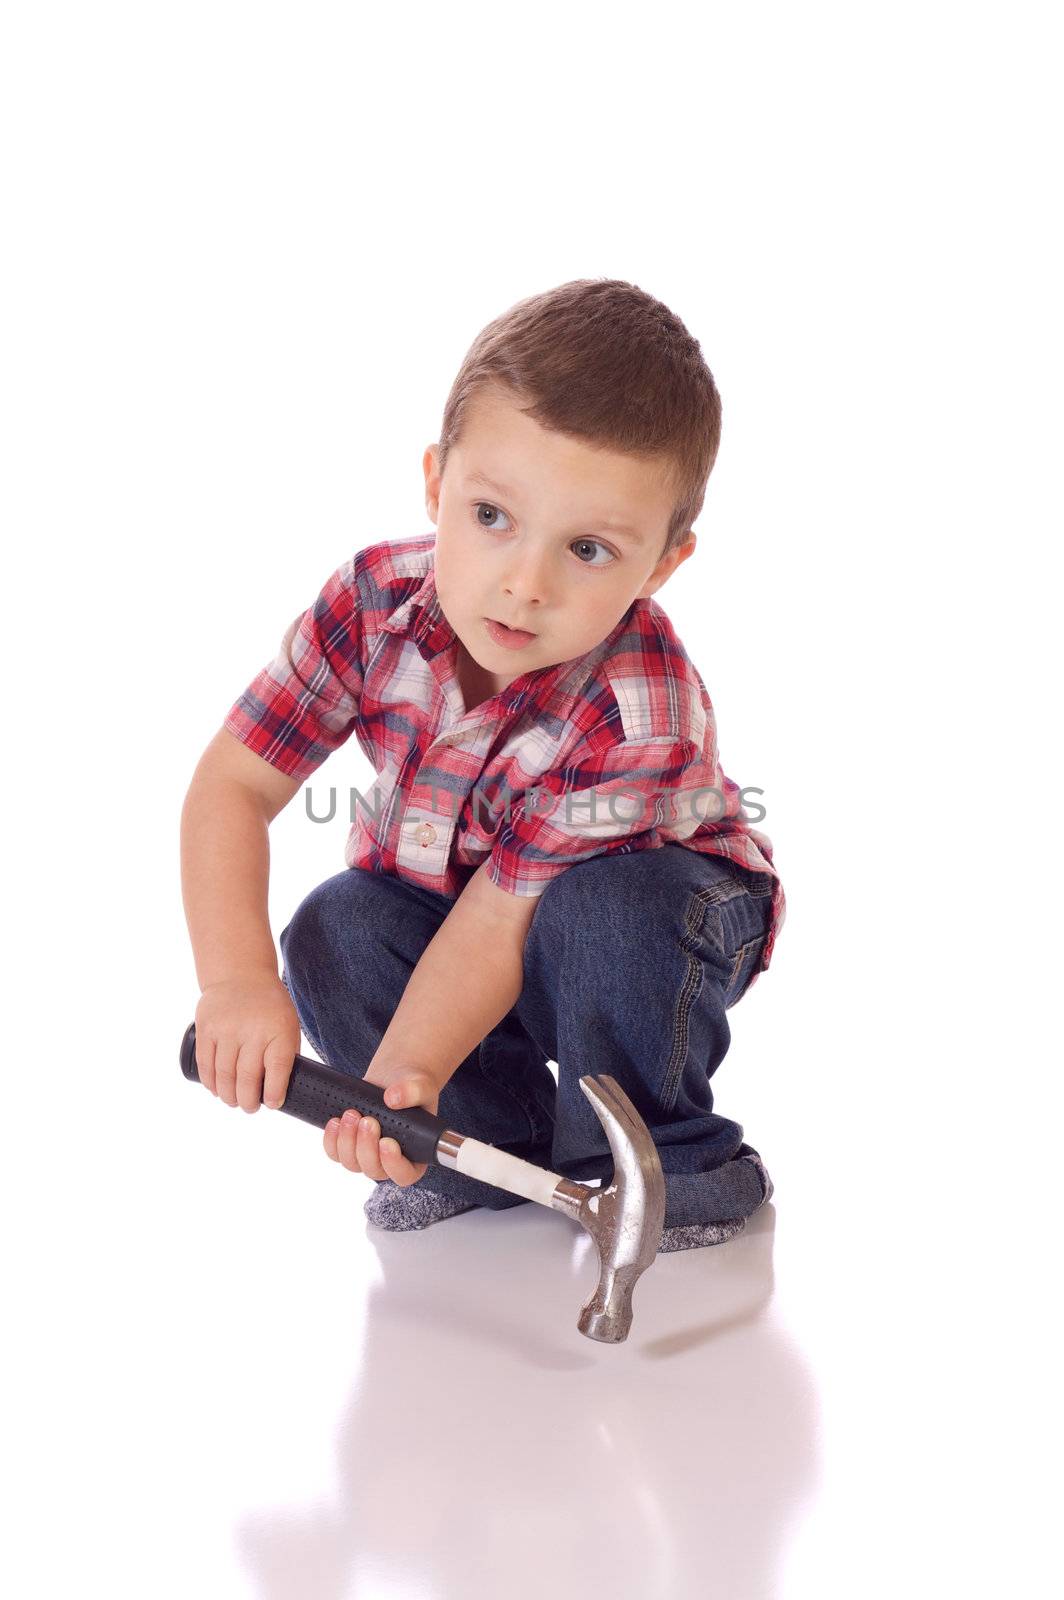 Cute little boy with a hammer